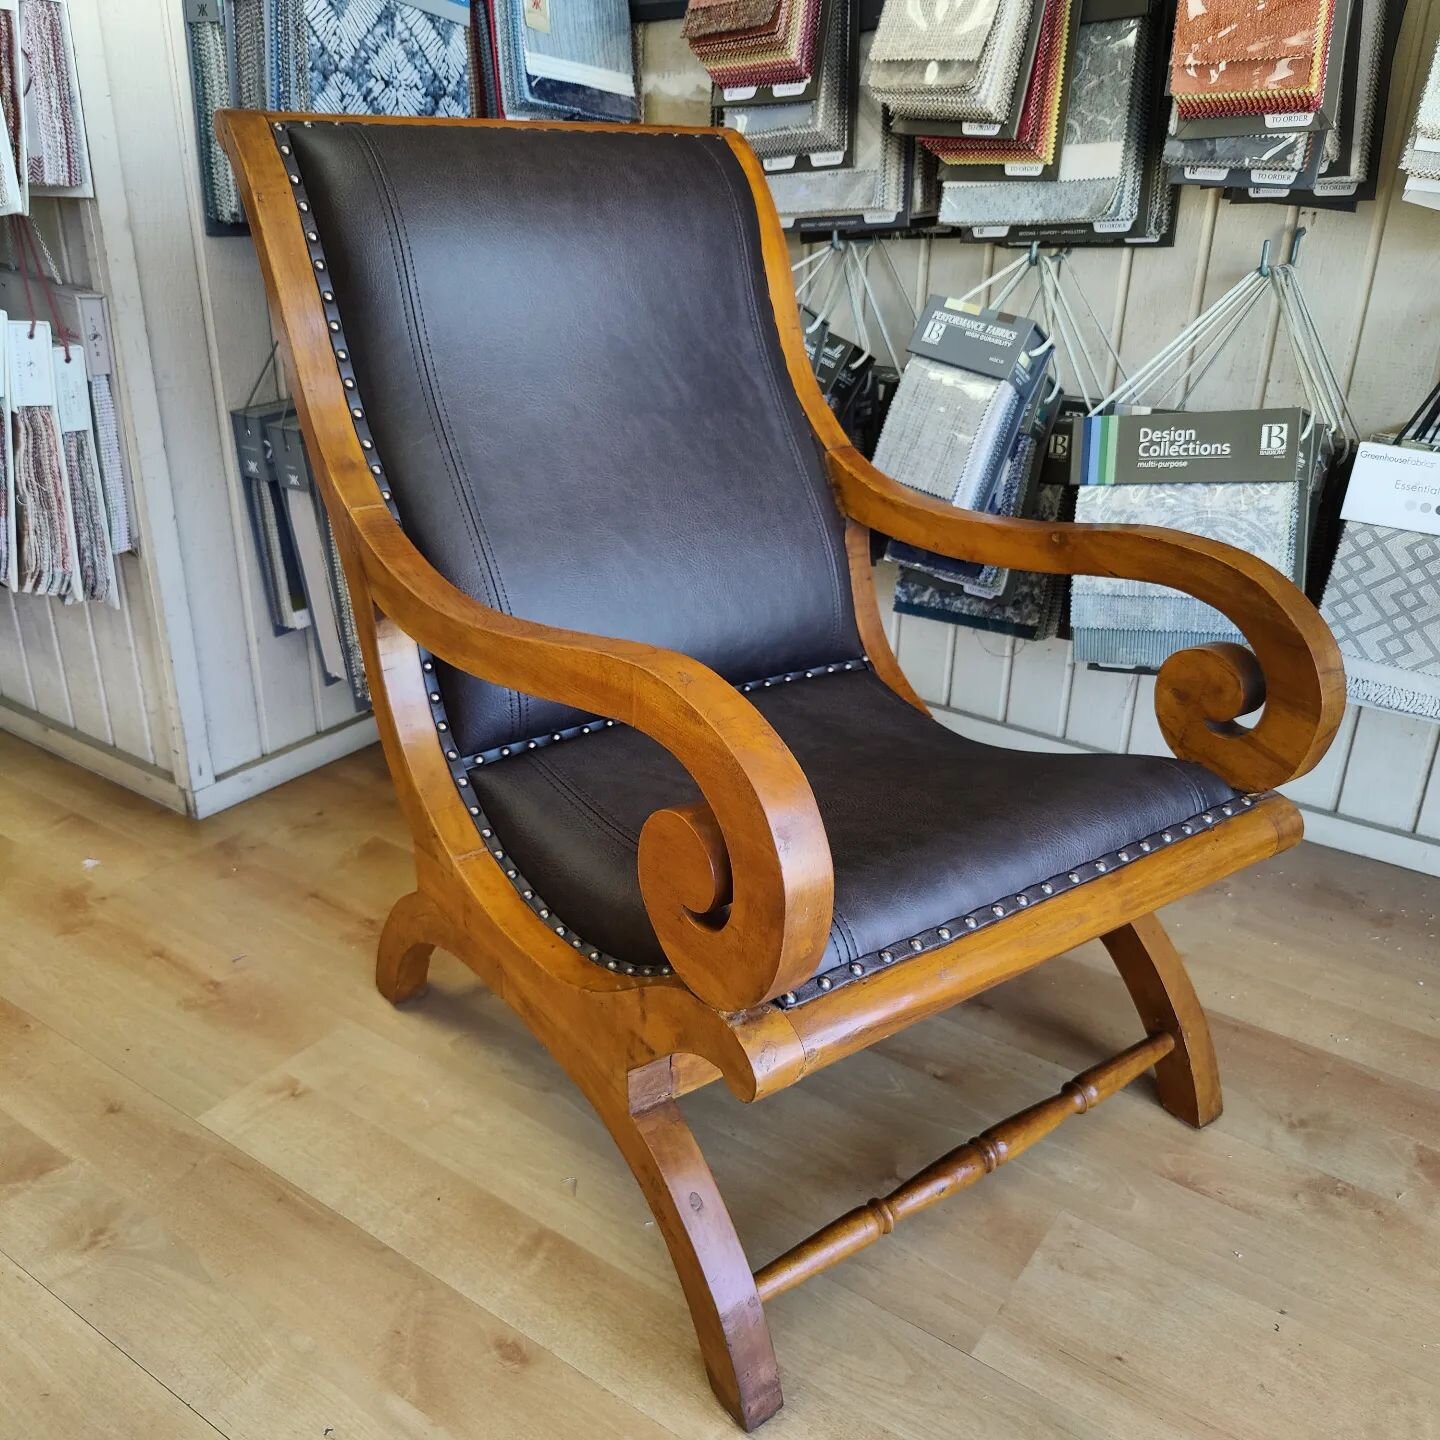 Beautiful wood lounge chair

#upholstery #familybusiness #furnitureupholstery #sandiego #elcajon #smallbusiness #vintagefurniture #vintage #loungechair